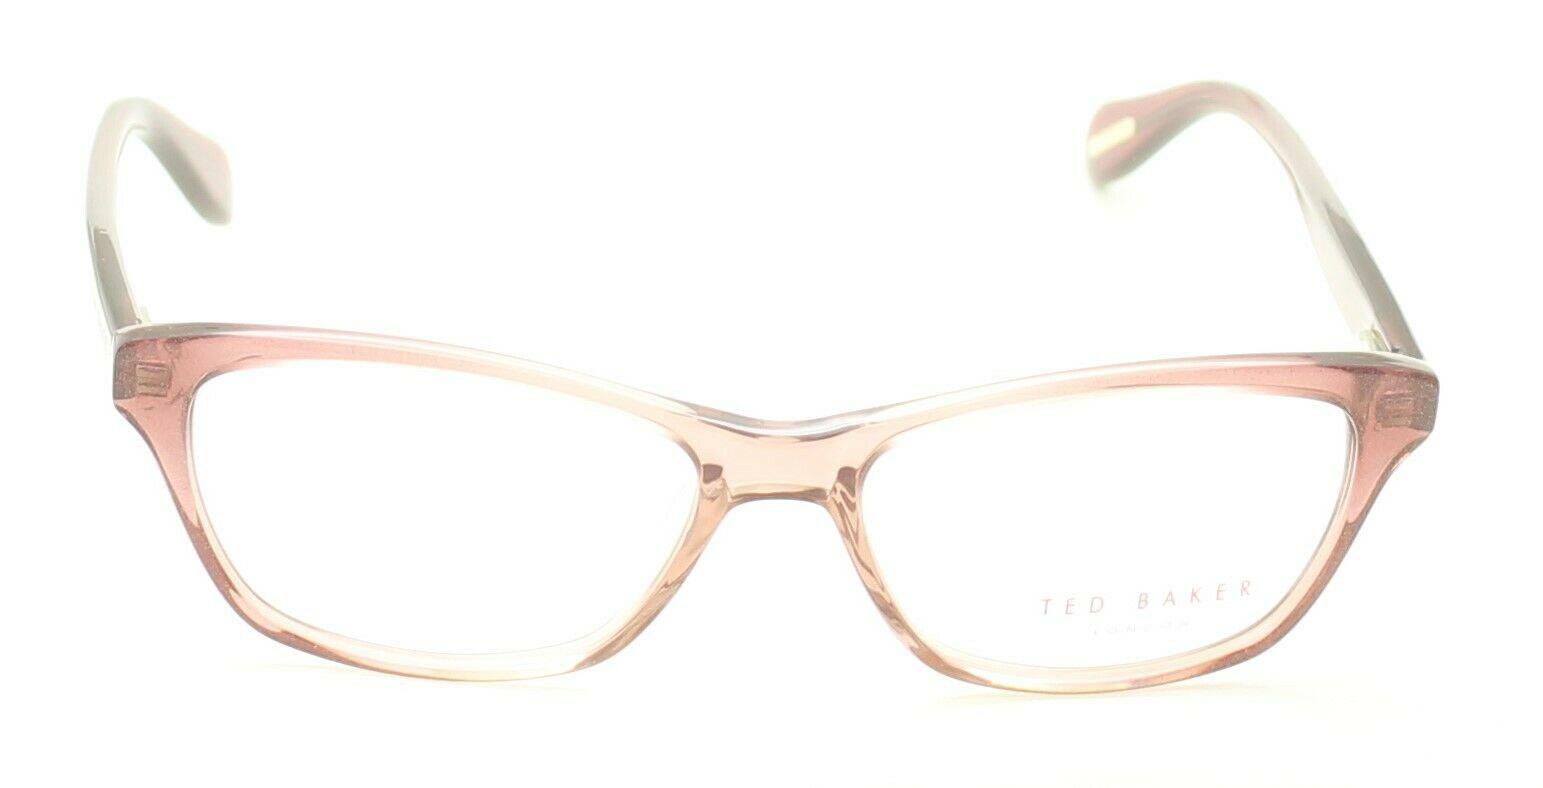 TED BAKER Lorris 9072 227 52mm Eyewear FRAMES Glasses Eyeglasses RX Optical -New